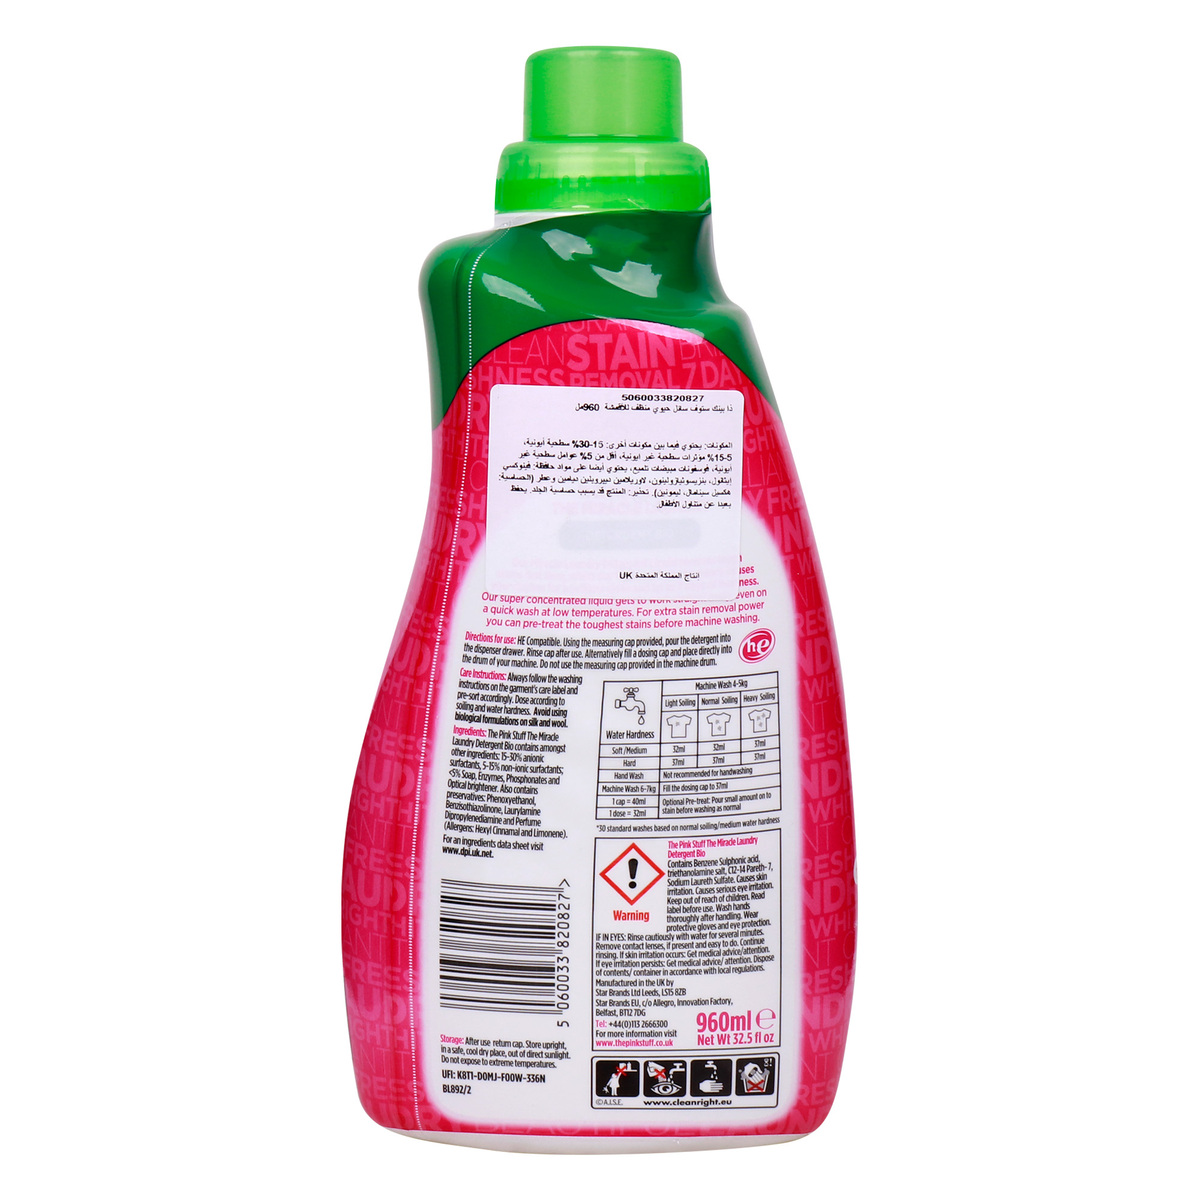 Star Drops Pink Stuff Miracle Bio Laundry Detergent 960 ml